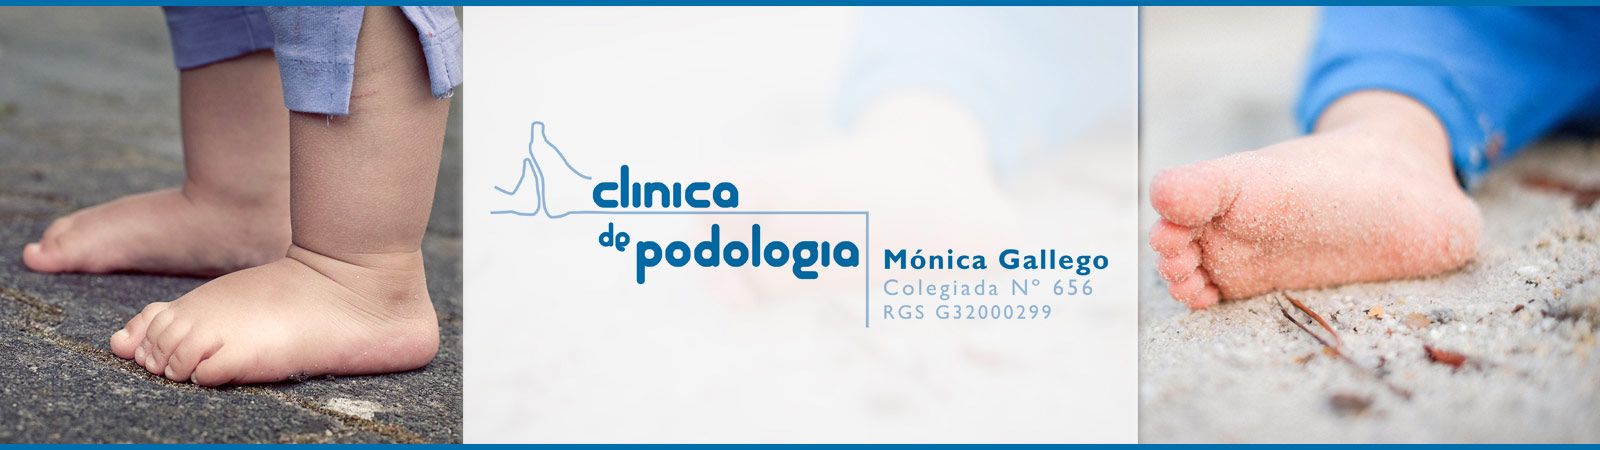 Podóloga Mónica Gallego Rodríguez banner 1